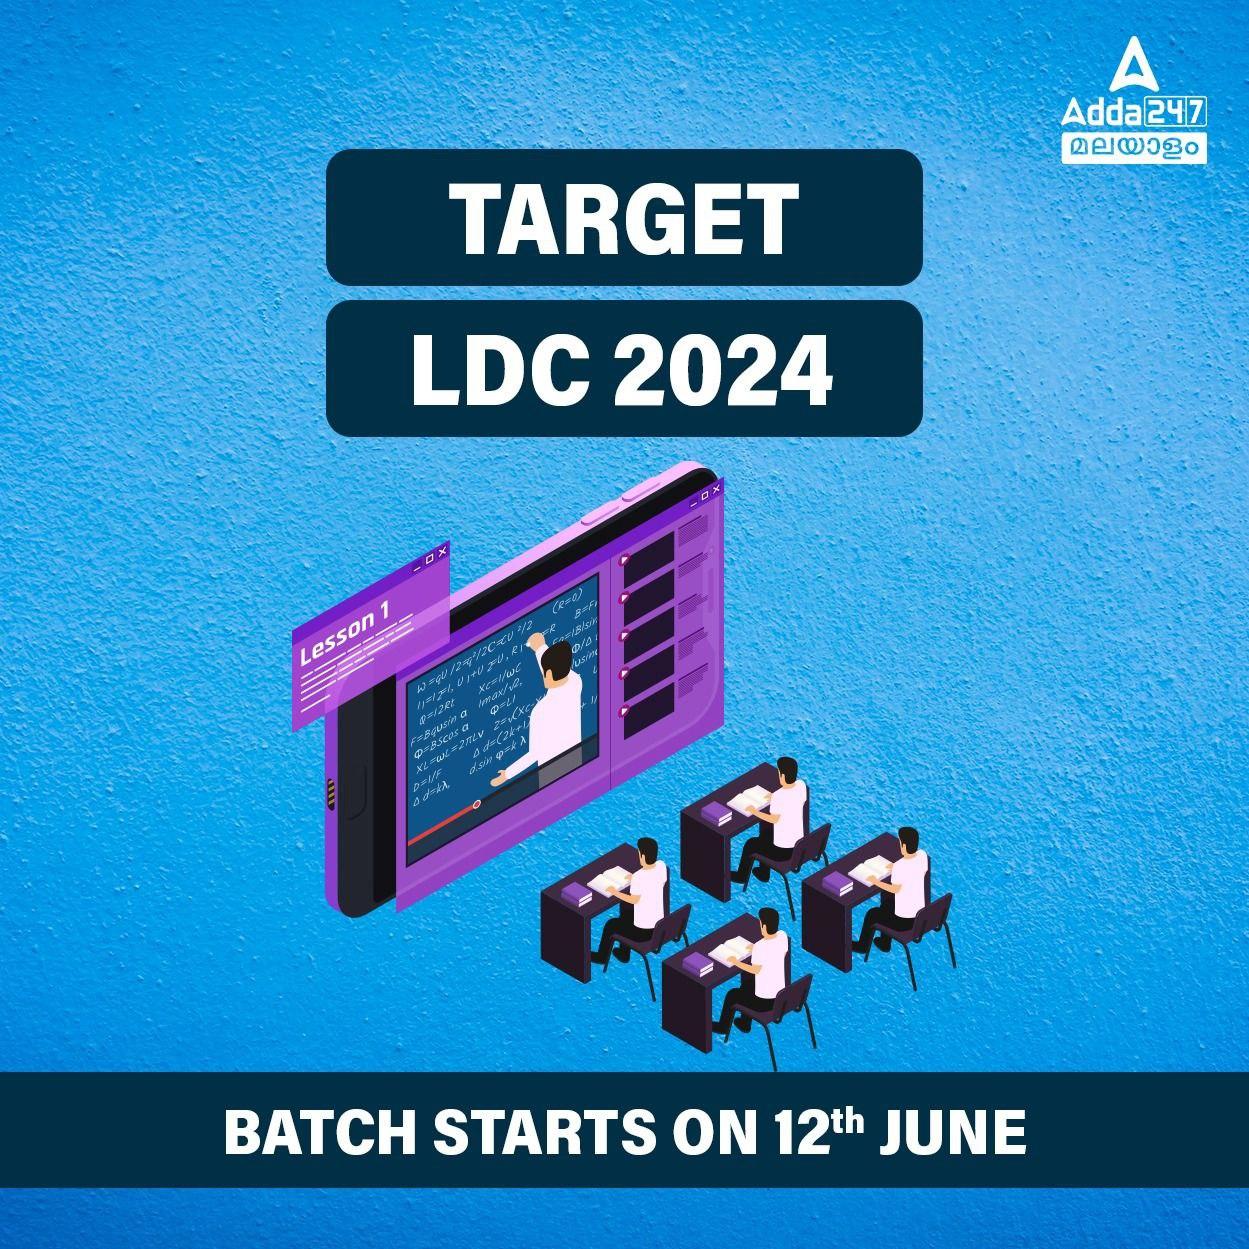 TARGET LDC BATCH 2024